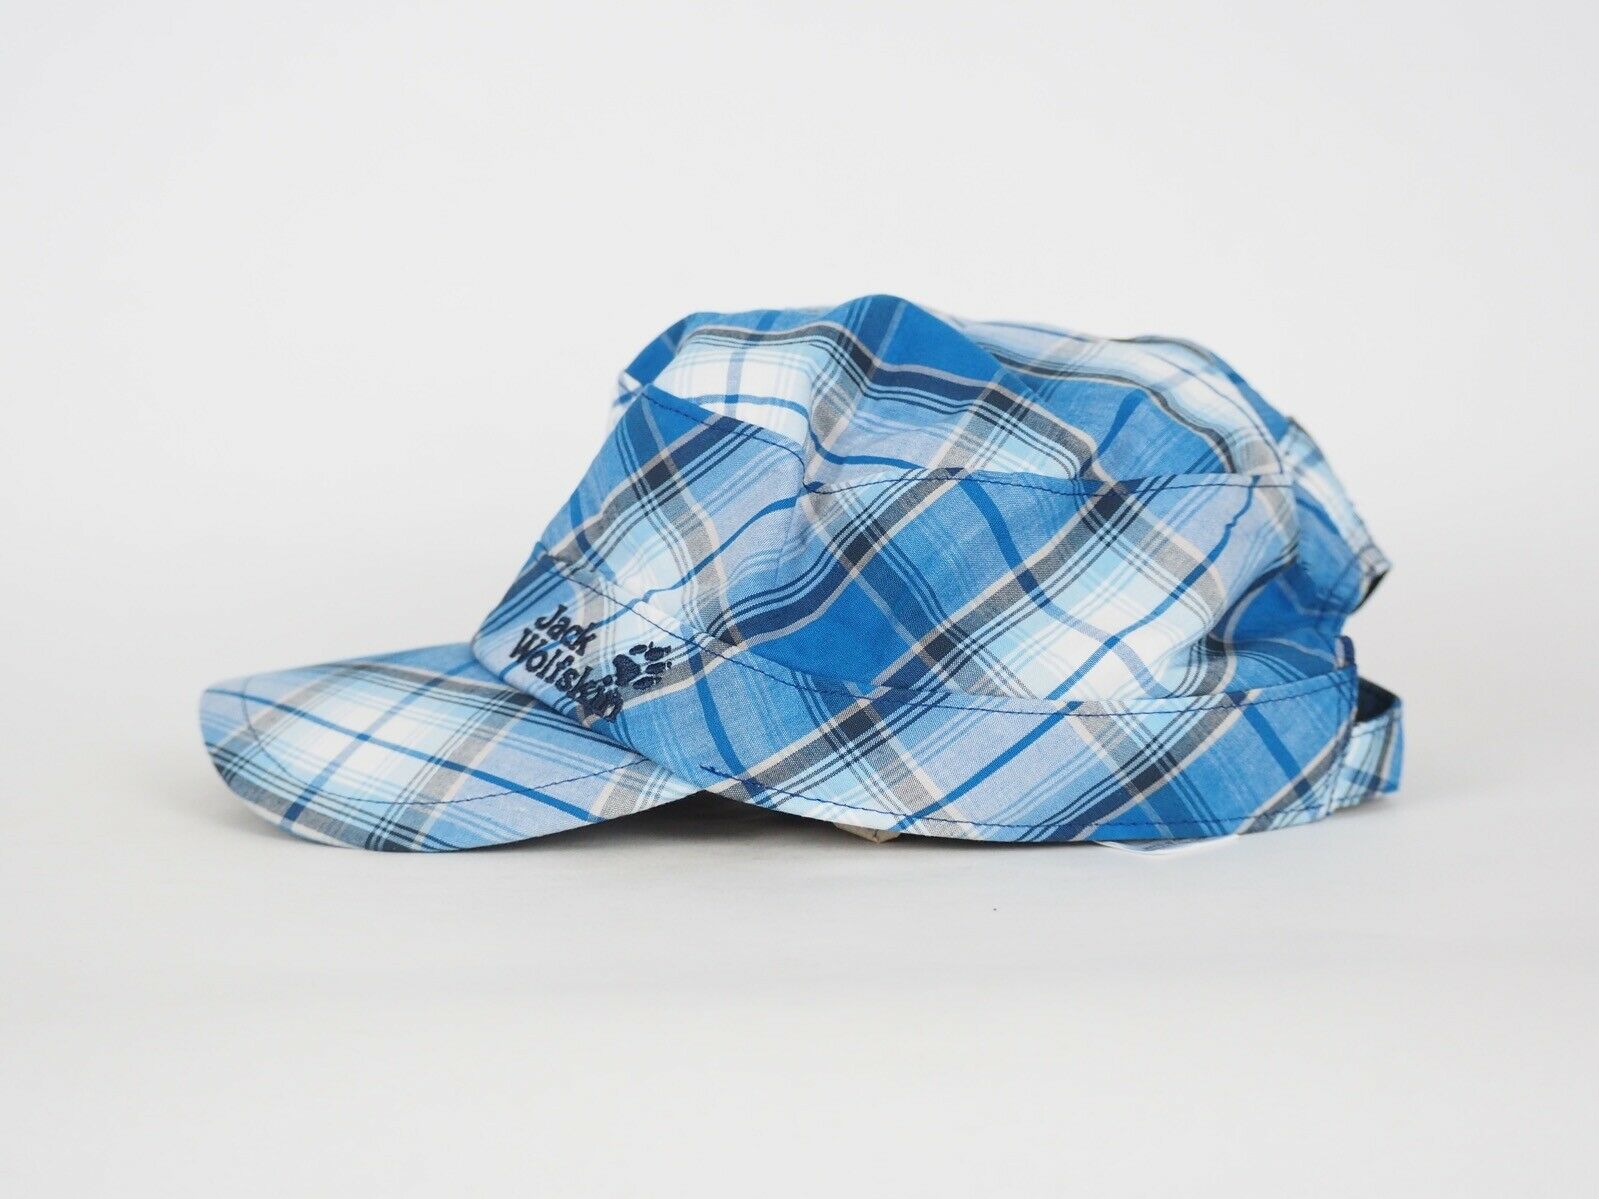 Jack Wolfskin Fairford 5008271 Air Blue Checks Cap Casual Kids Summer Hat - London Top Style